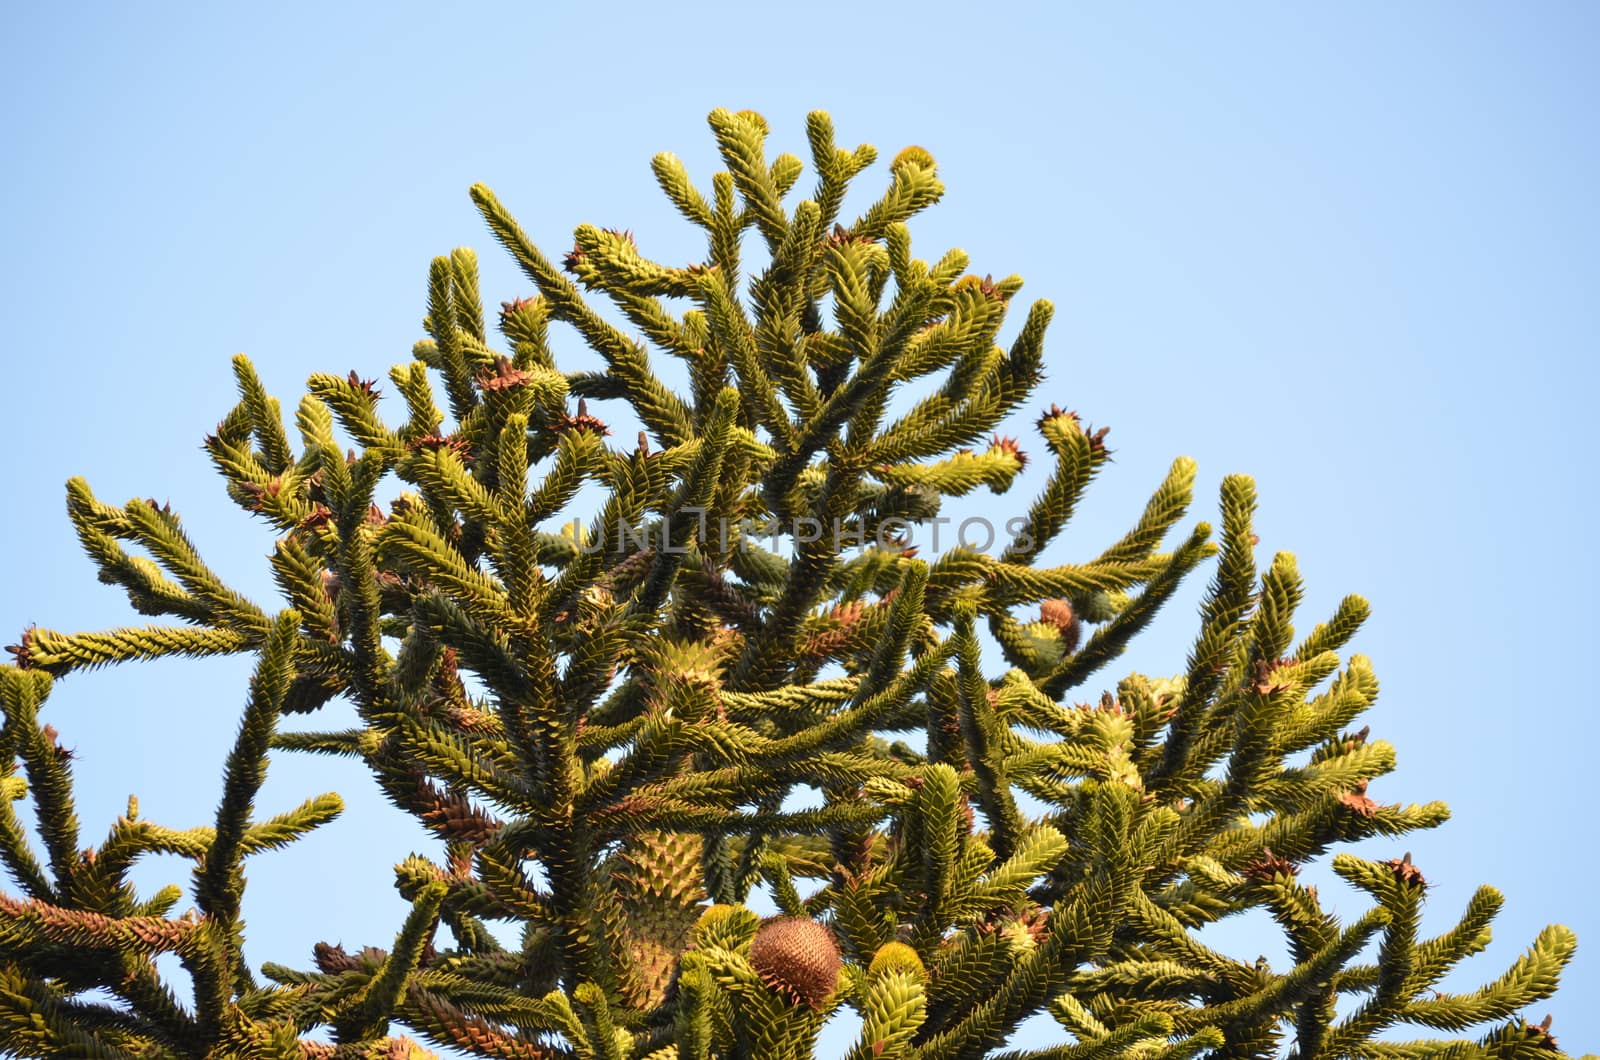 Monkey tail tree - Araucaria by JFsPic